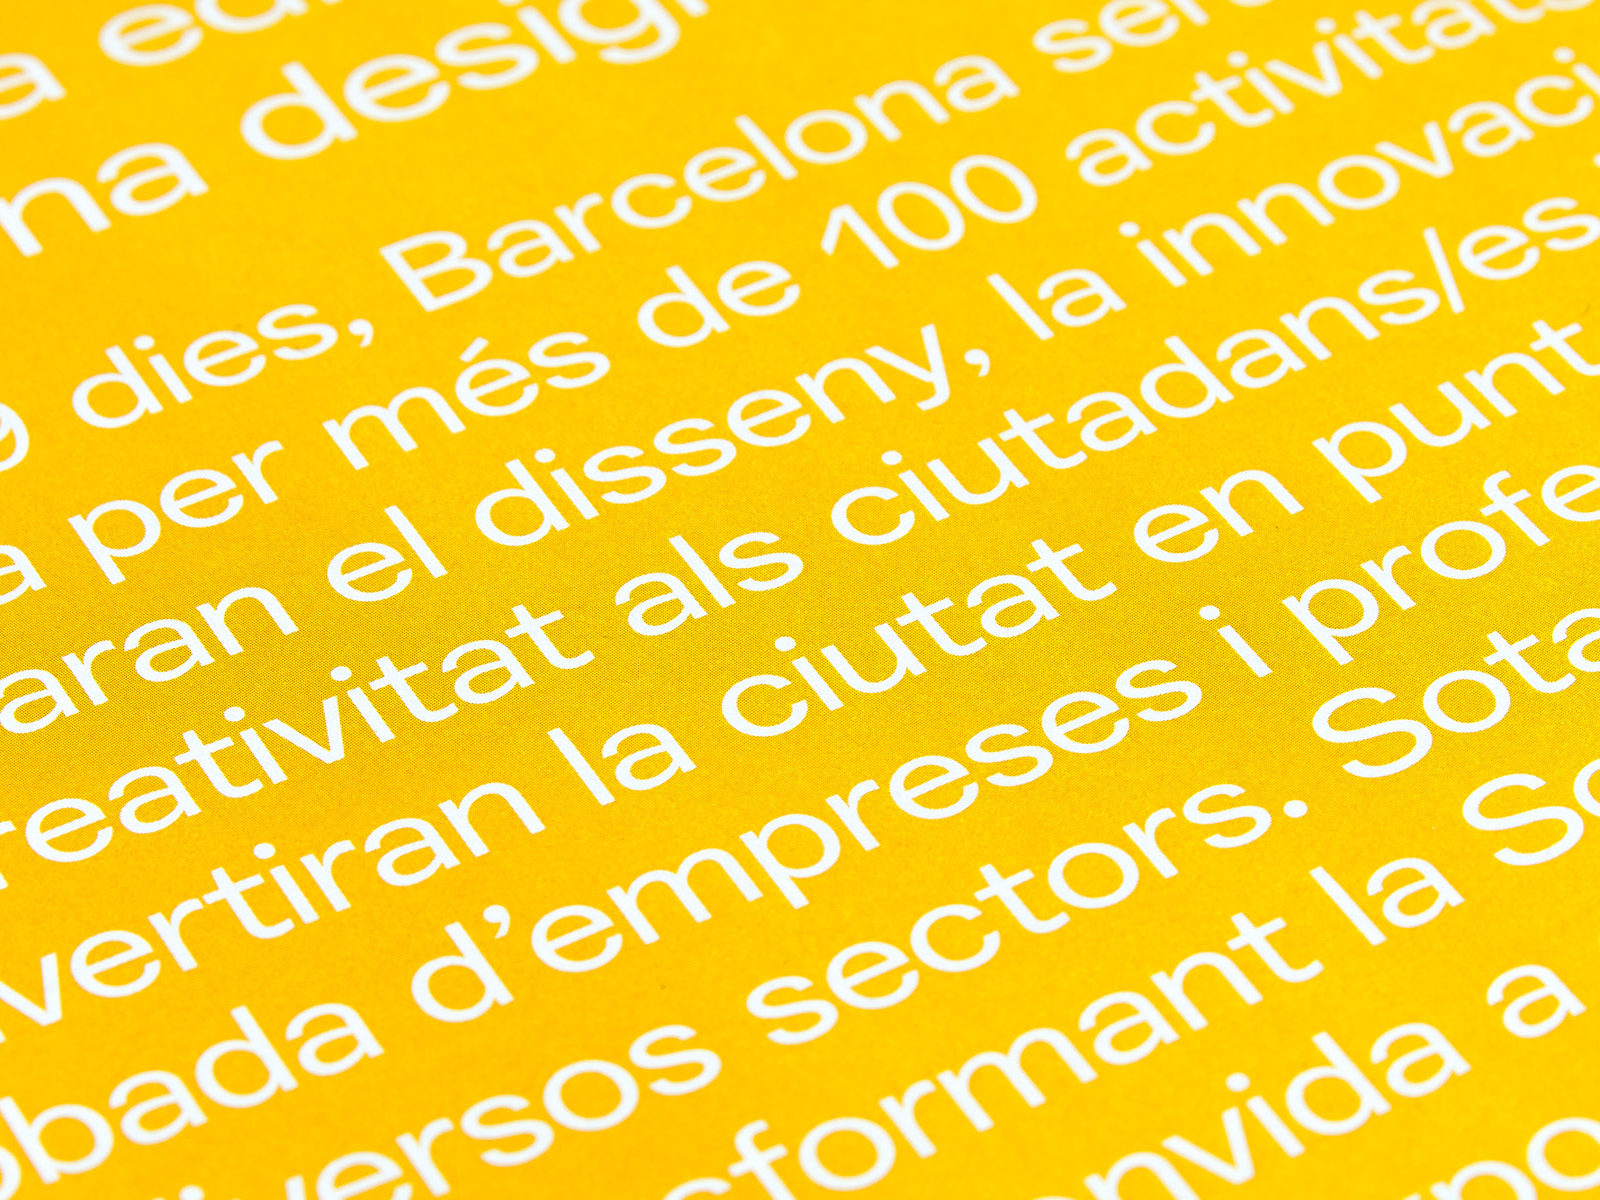 Barcelona Design Week ’17 | FOLCH